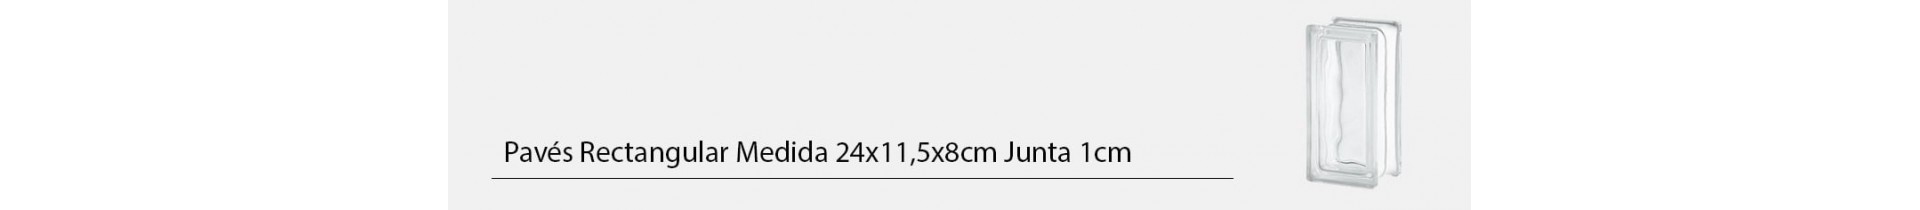 Pavés rectangular junta 1cm medida 24x11,5x8cm